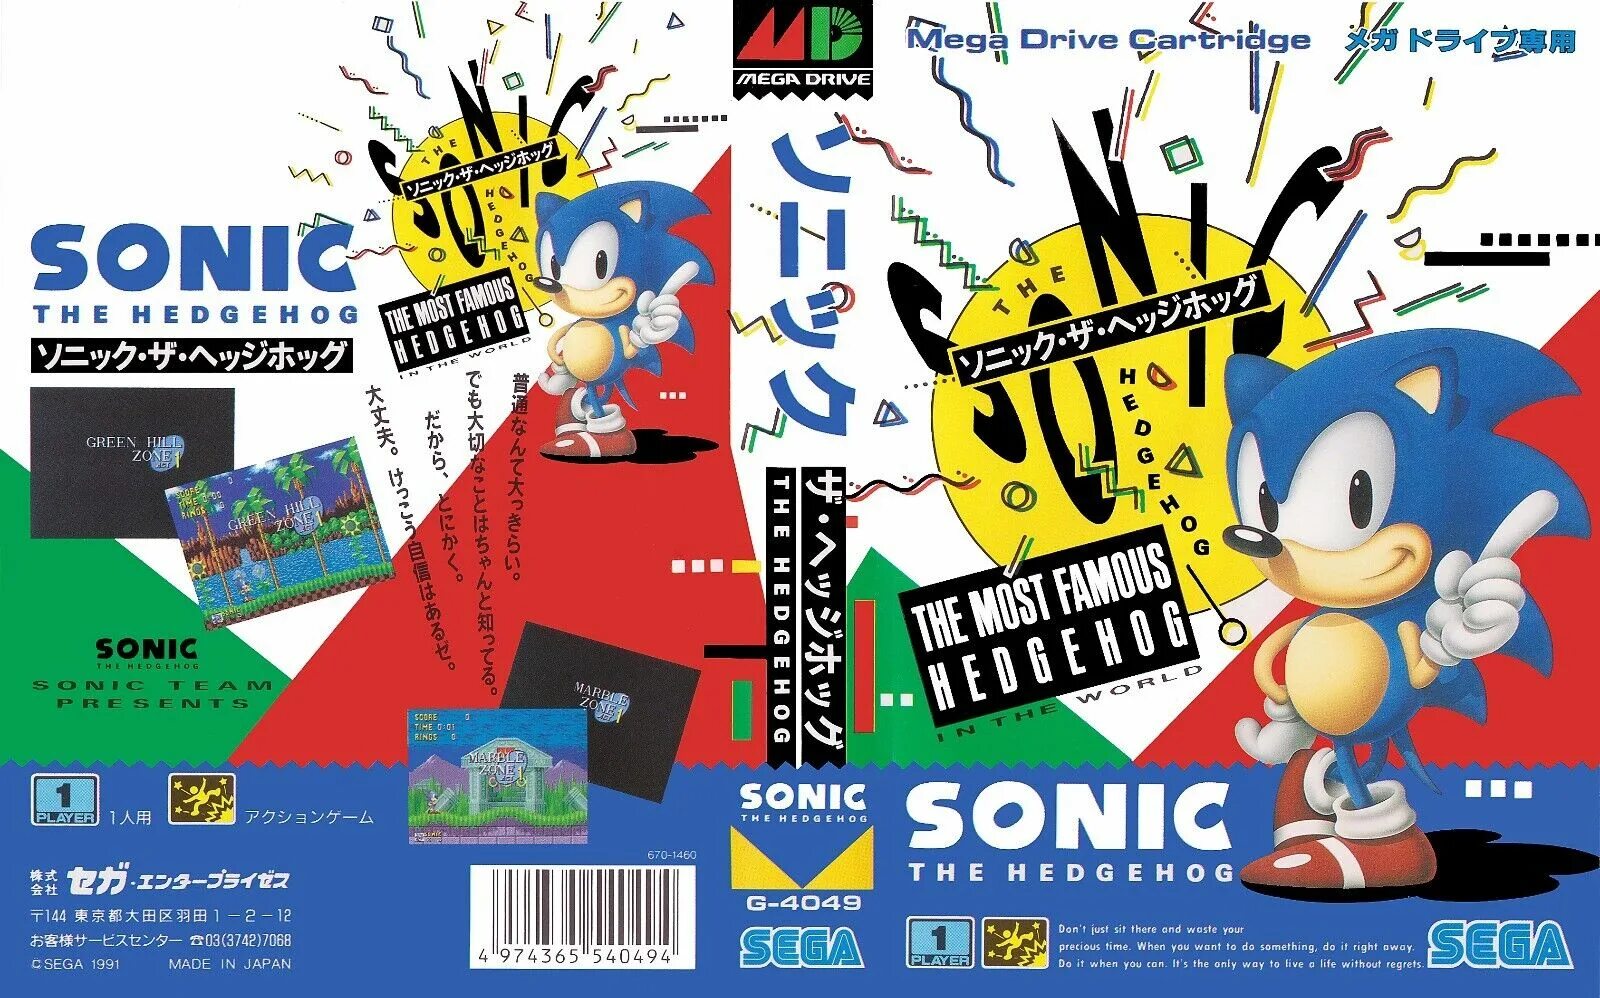 Sonic 3 Sega Mega Drive. Sonic the Hedgehog 1991 16 бит. Коробка Sega Mega Drive Japan. Sonic CD Sega картридж. Соник мега драйв